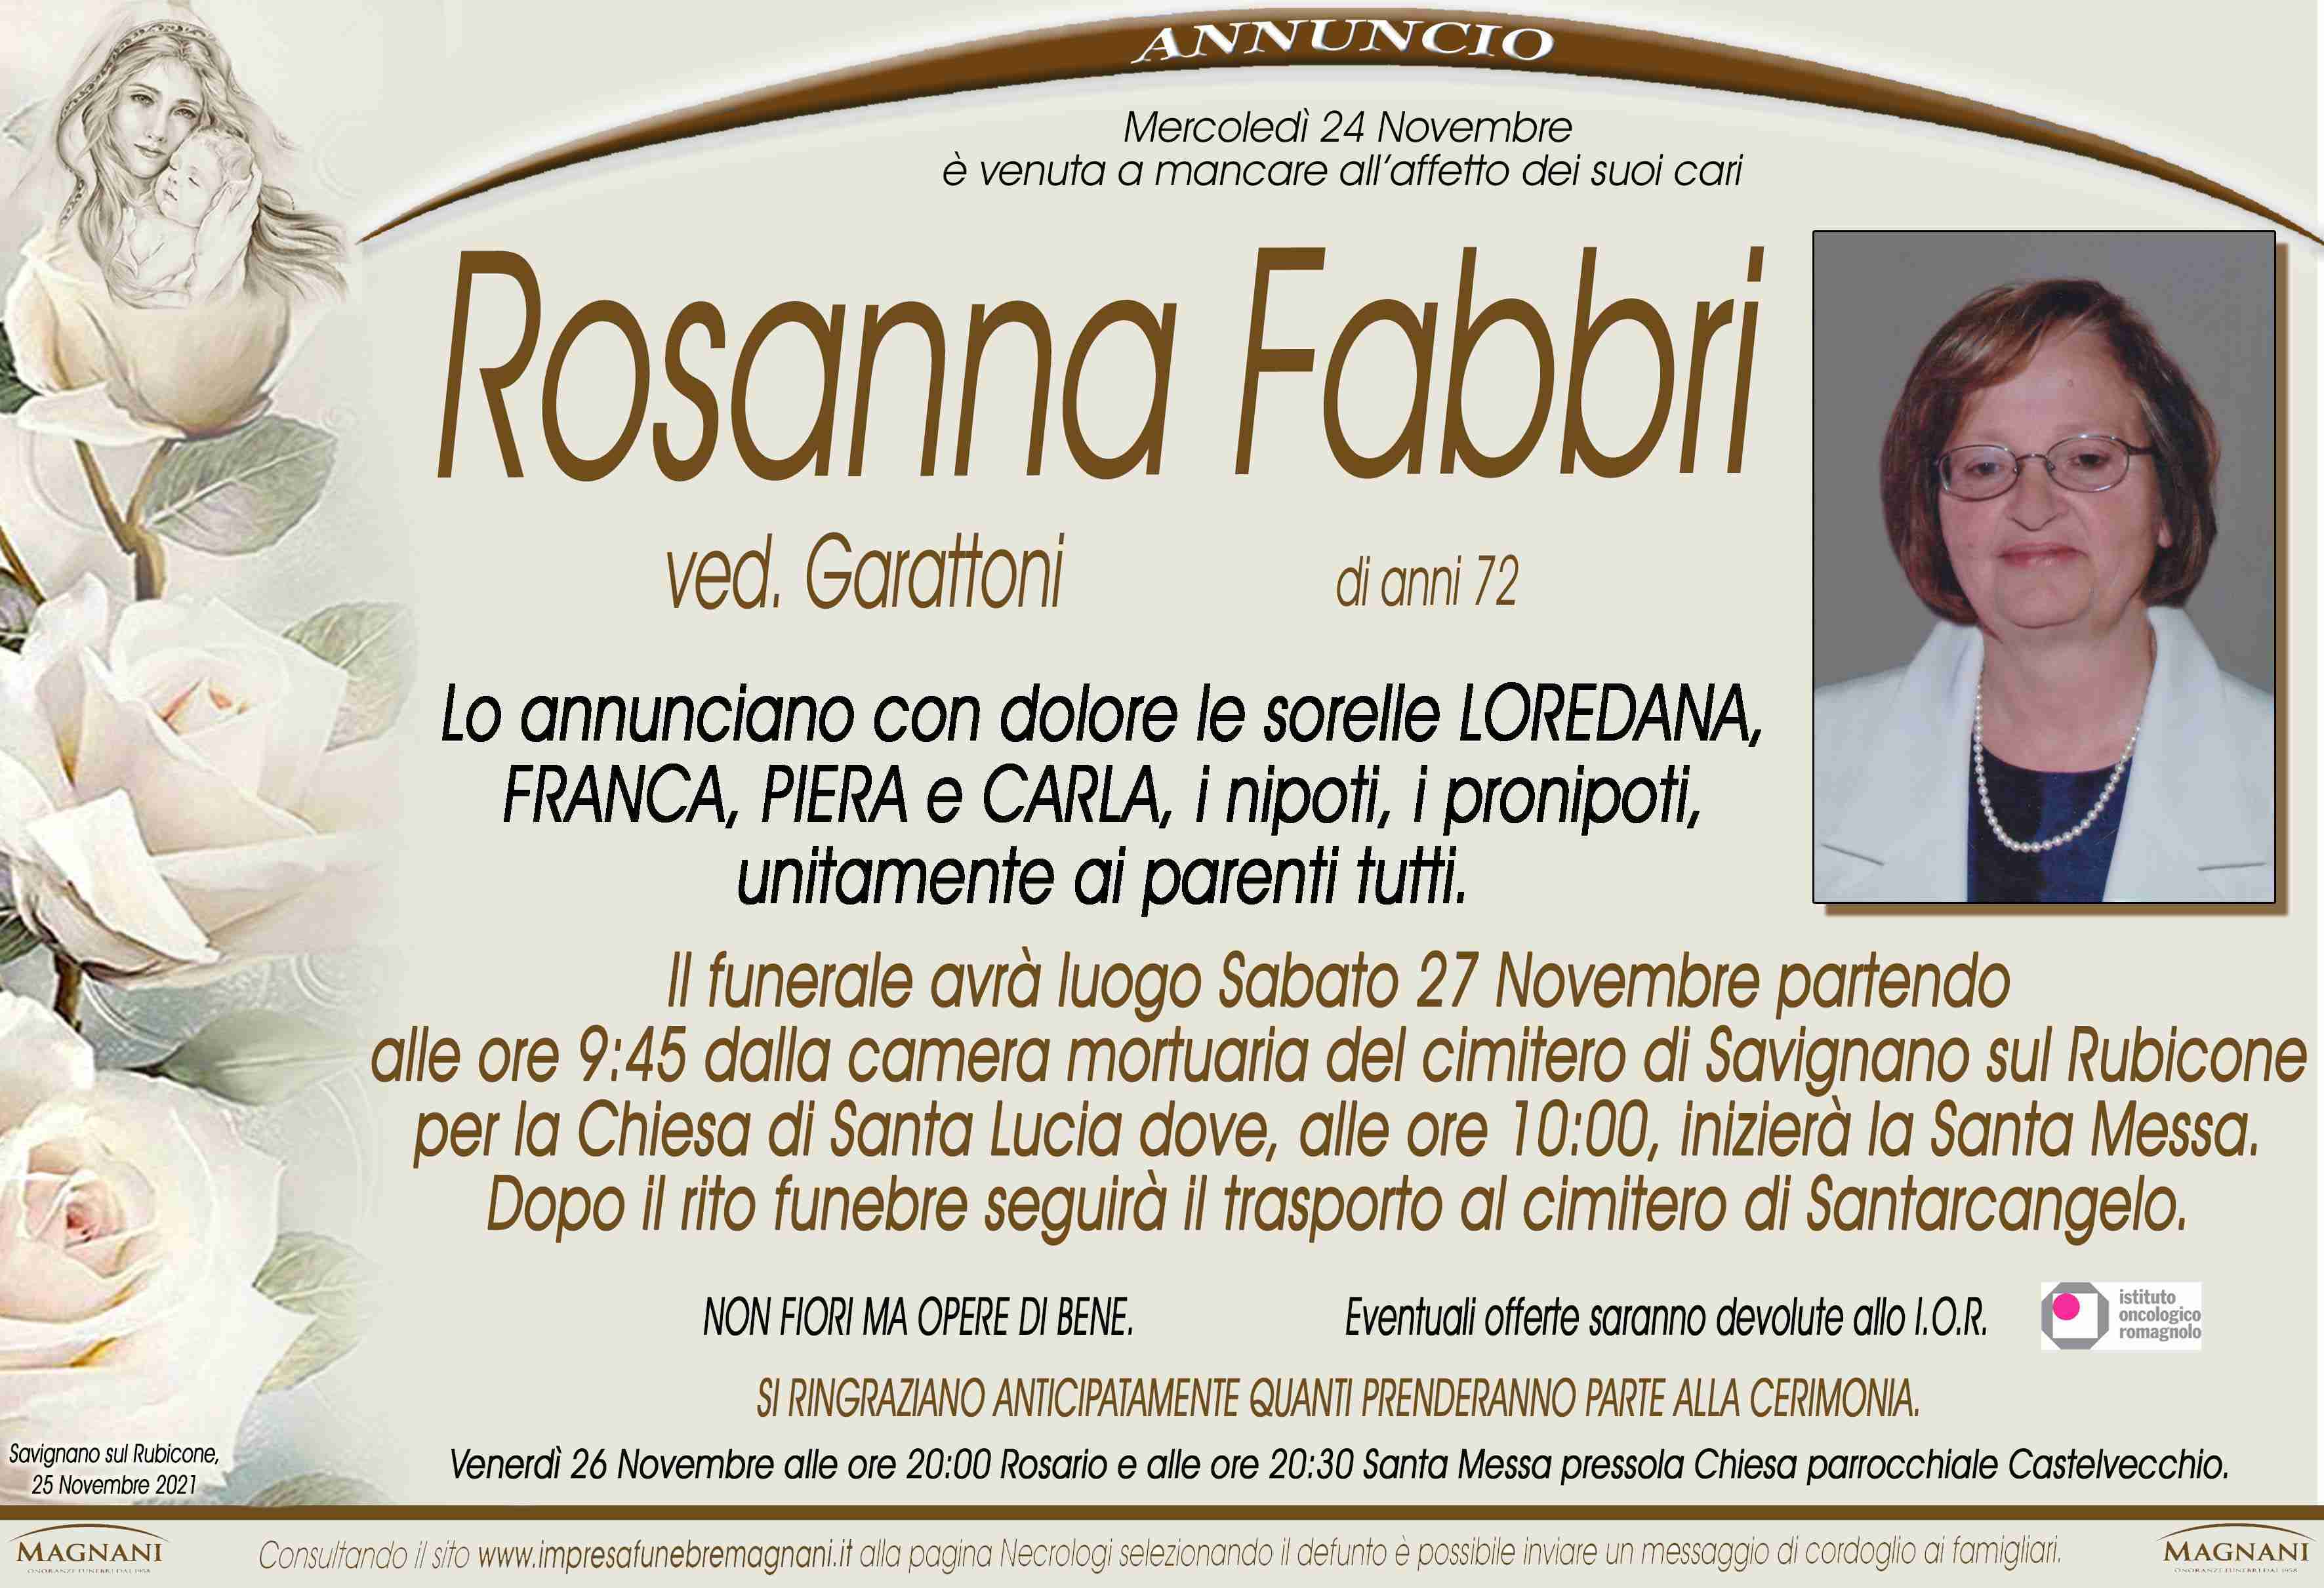 Rosanna Fabbri